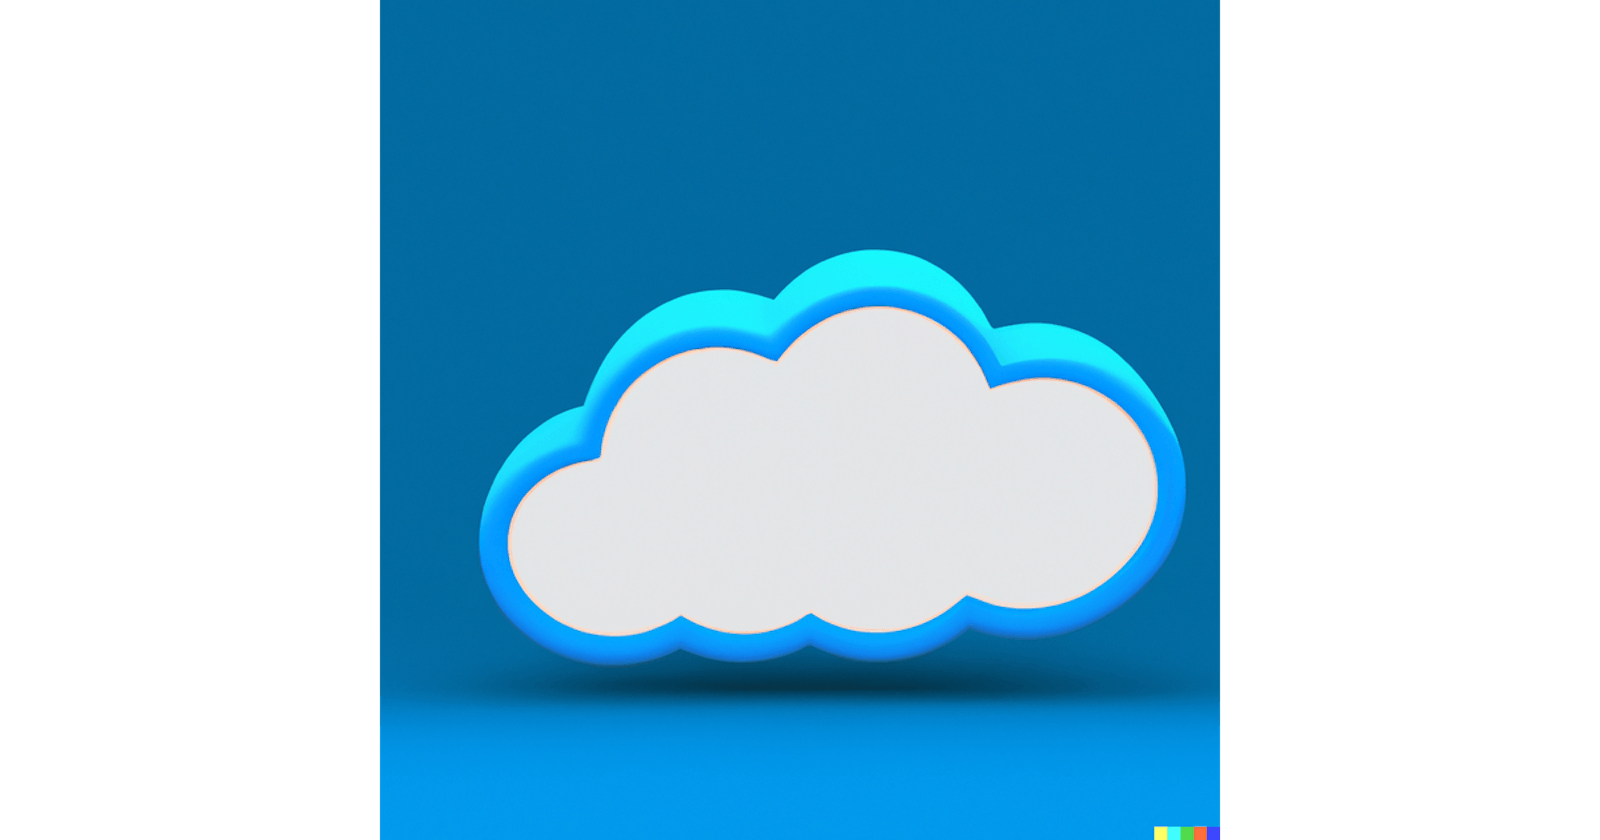 Welcome to Cloud Computing!